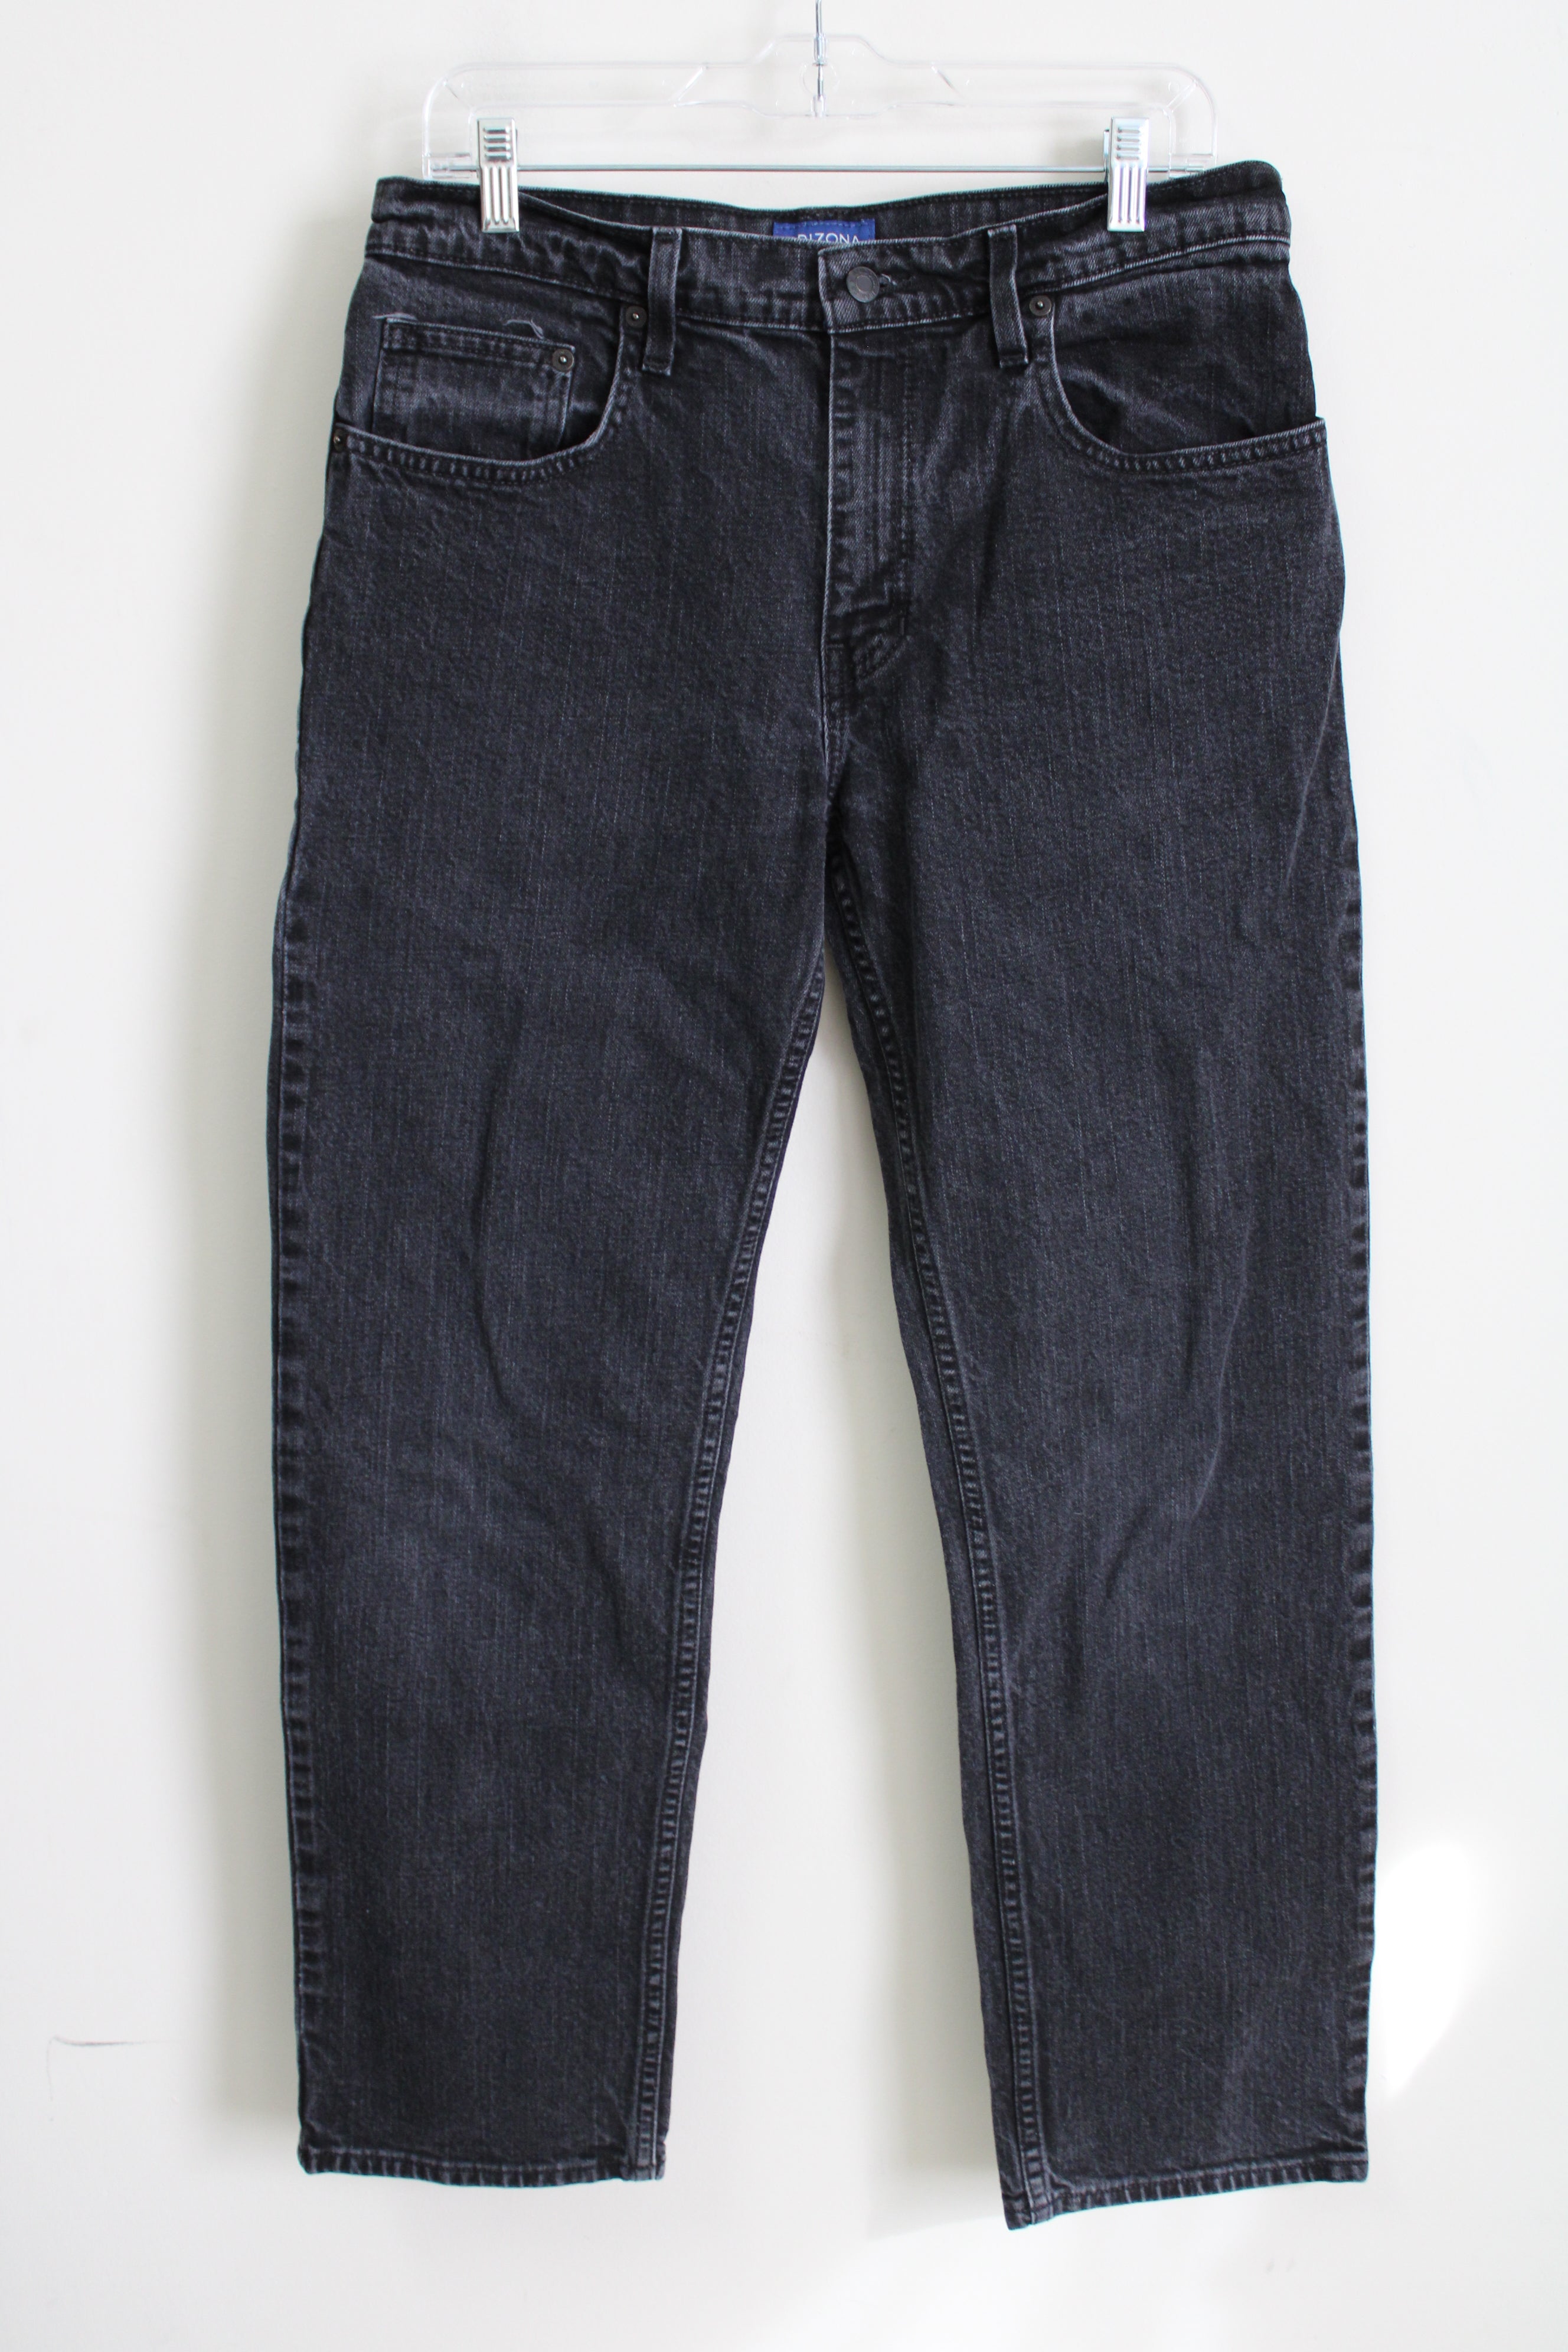 Arizona Black Jeans | 32X30